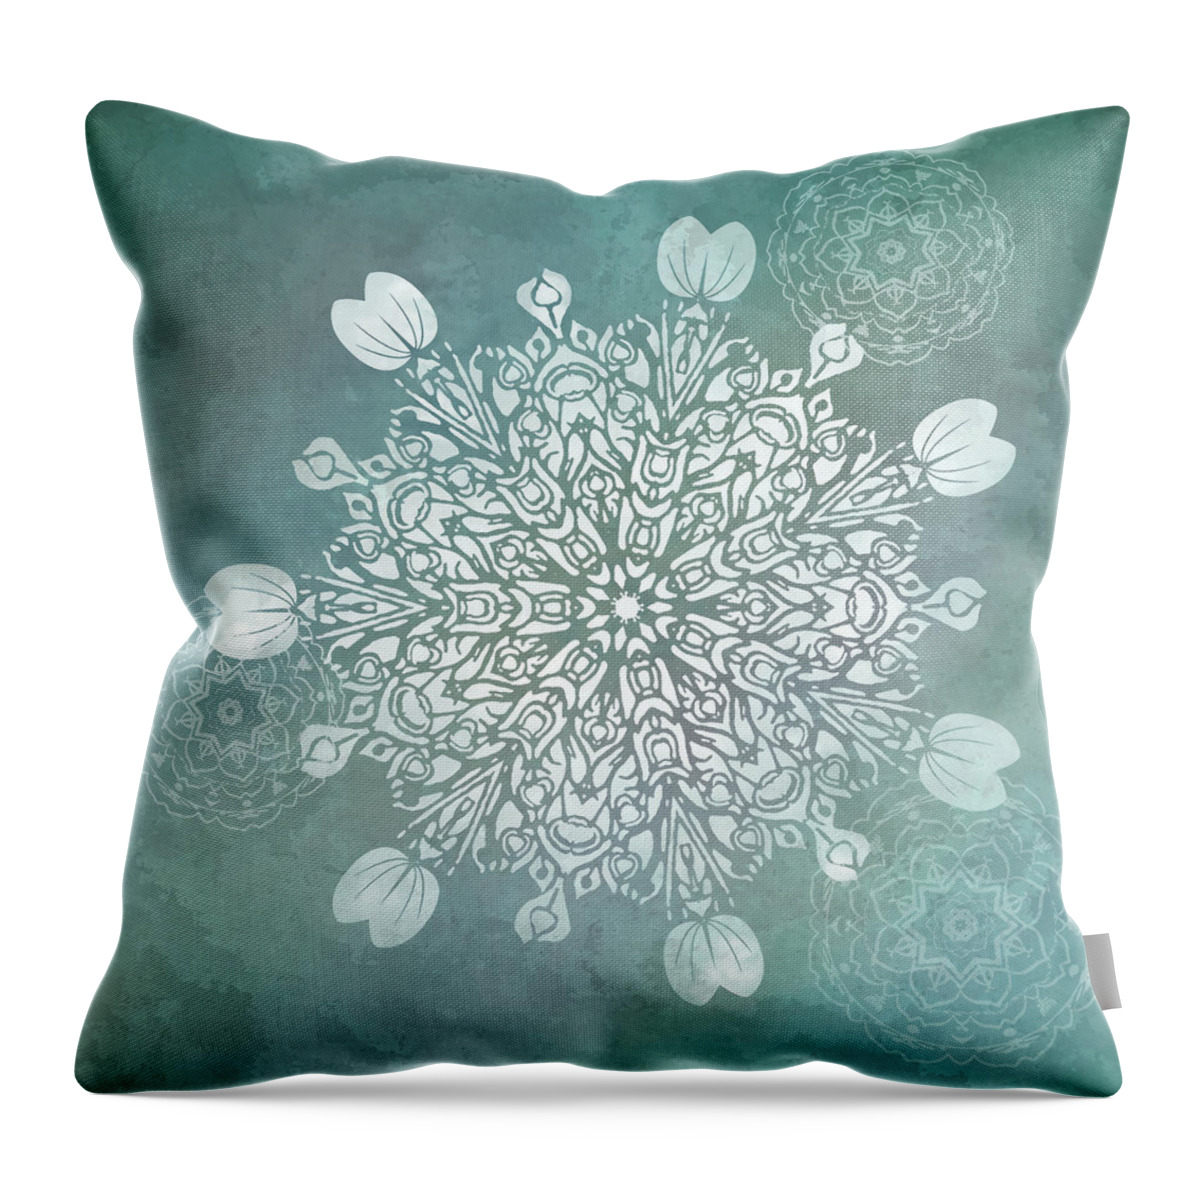 Mandala Throw Pillow featuring the digital art Turquoise Mandala Float by Deborah Smith